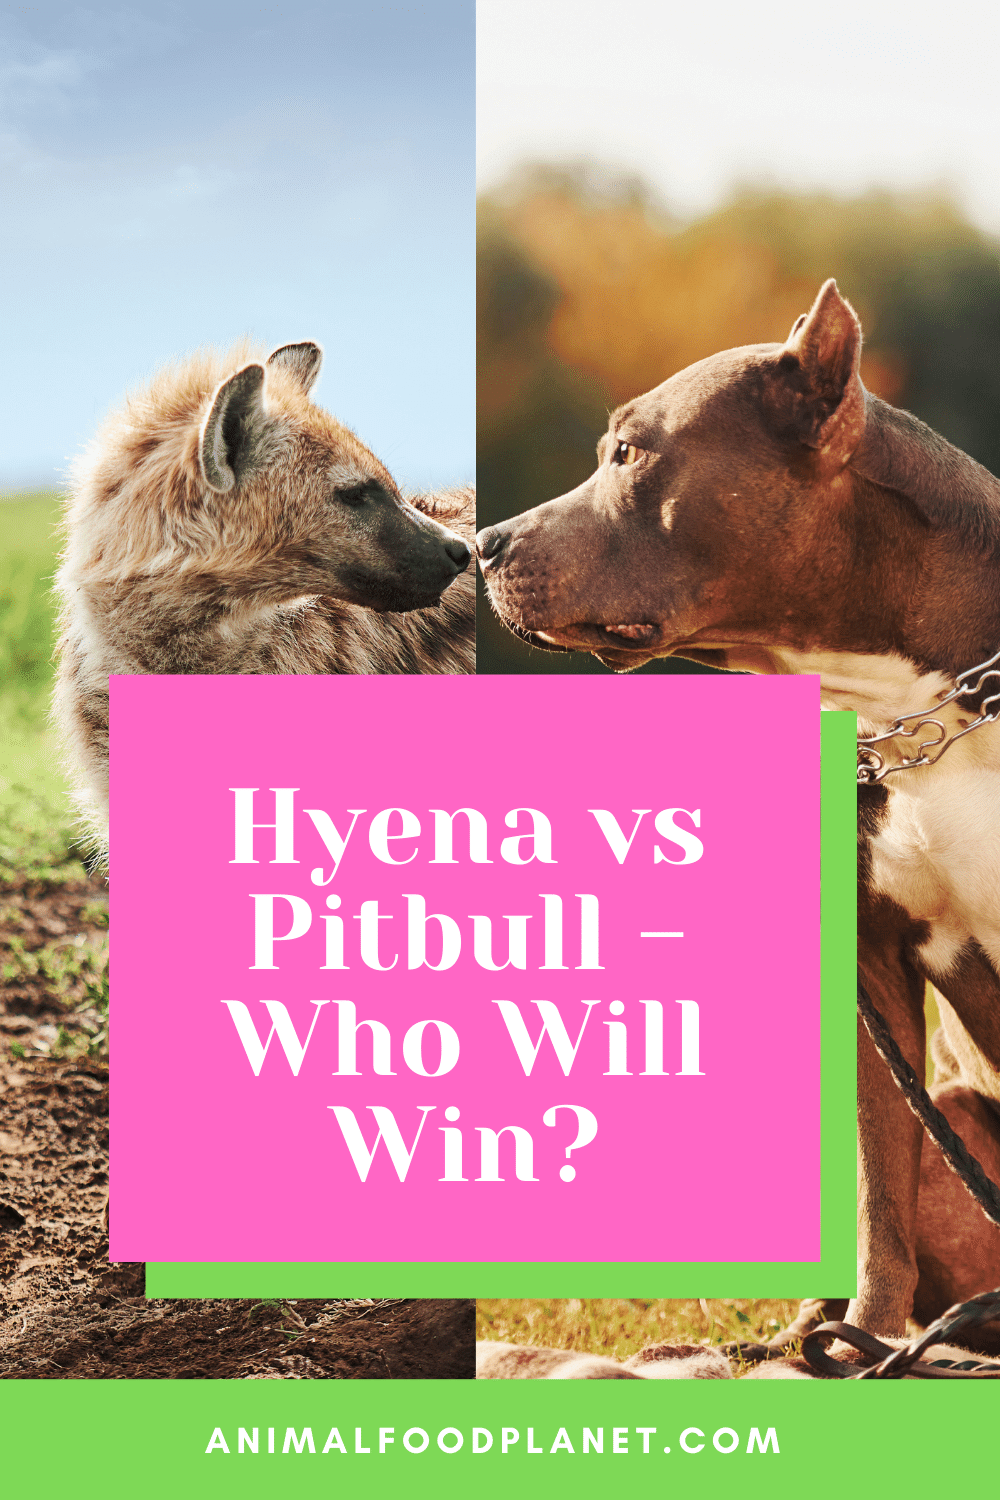 Hyena vs Pitbull - Who Will Win